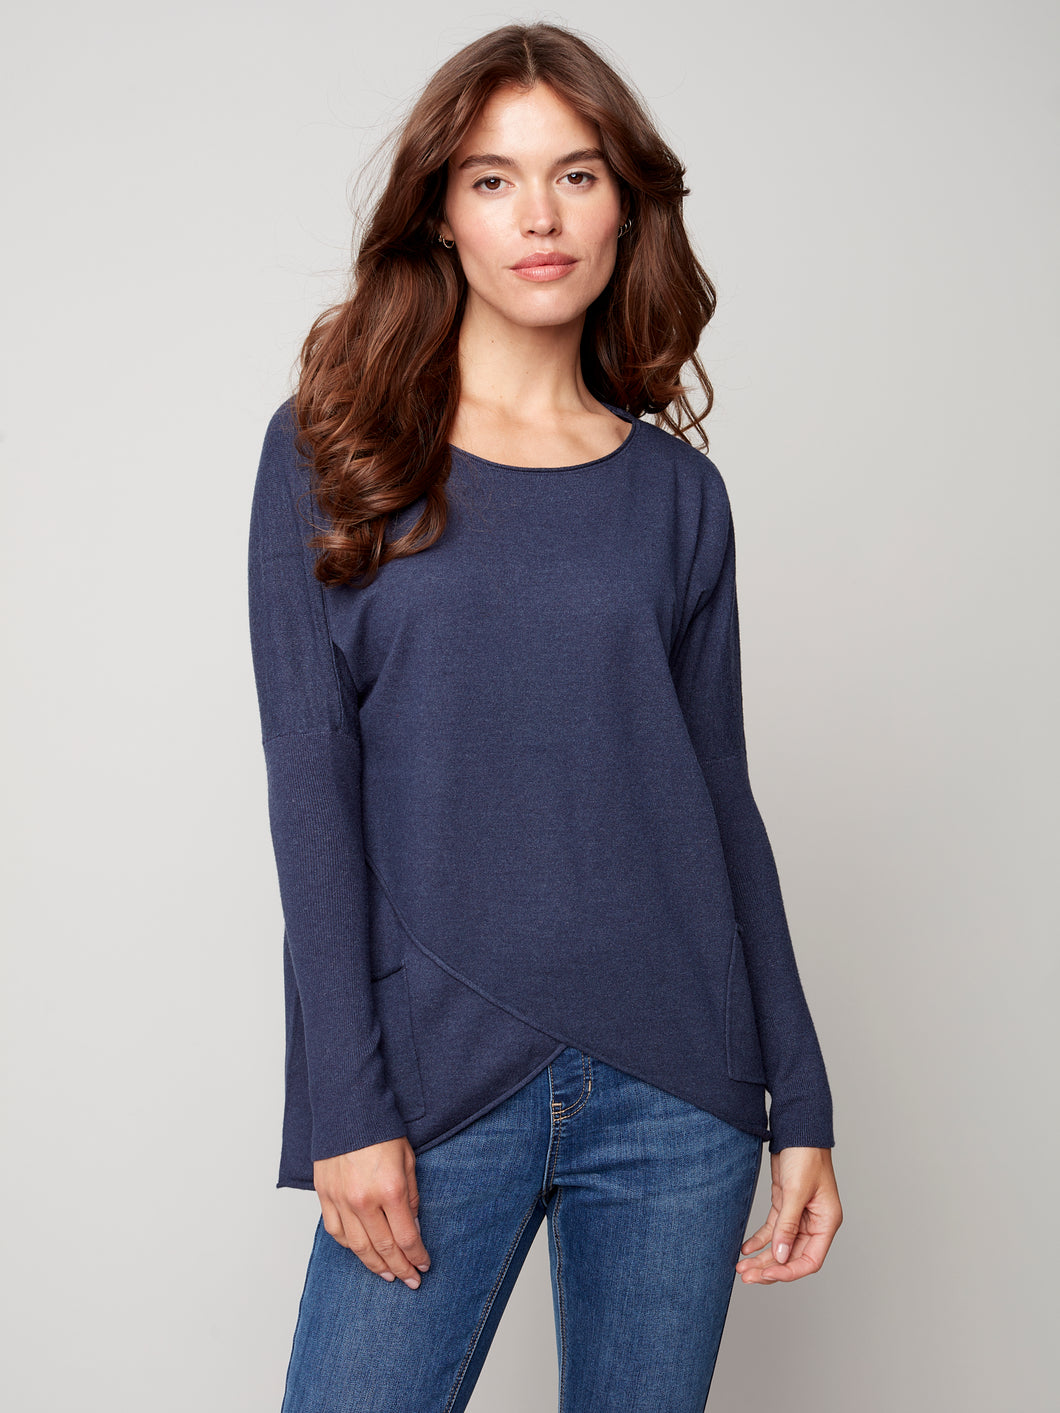 Charlie B Heather Denim Sweater - Size S